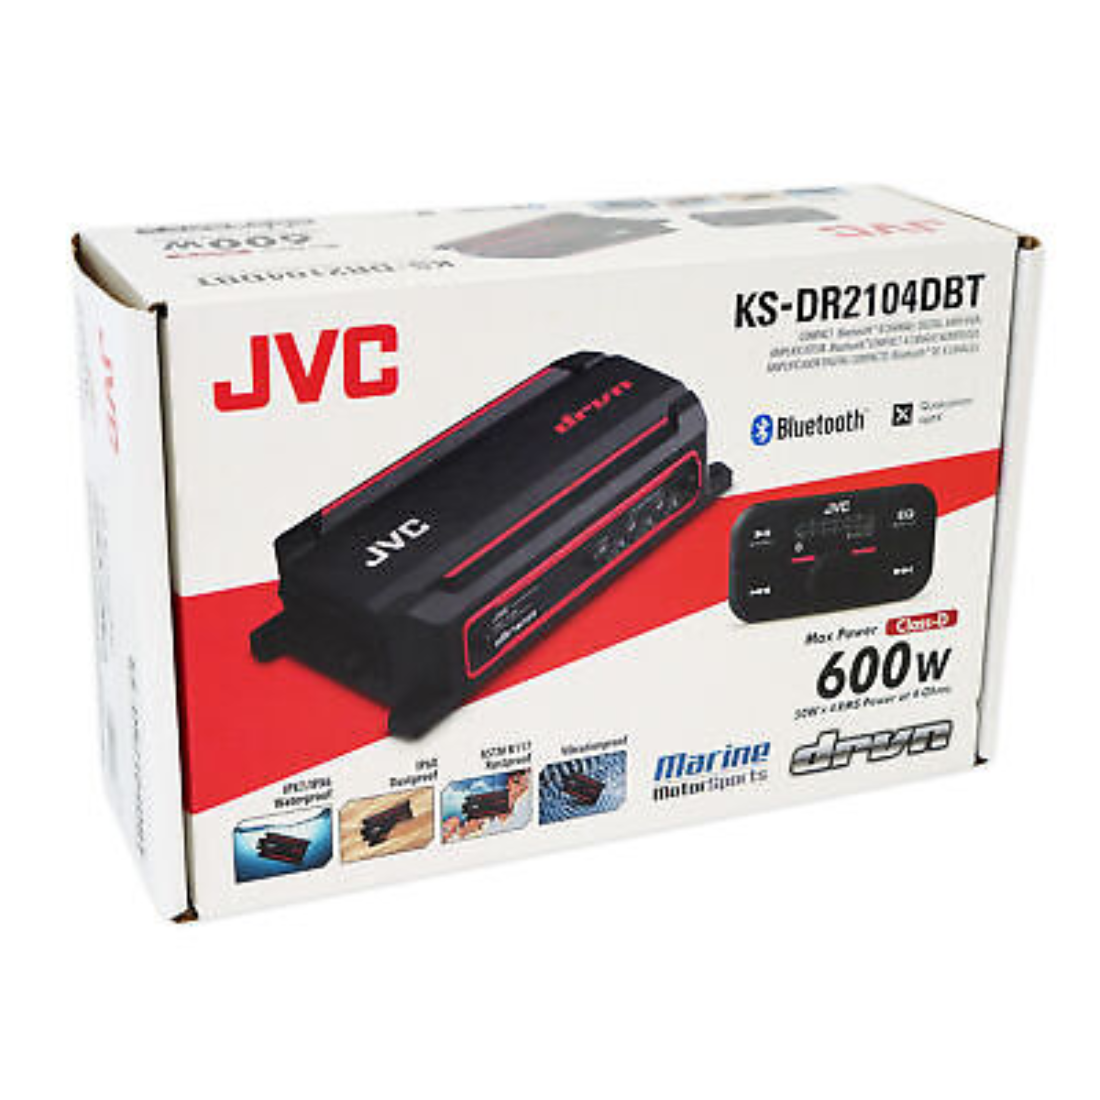 JVC KS-DR2104DBT 4-Channel 600W Class-D Digital Compact Amplifier w/ Bluetooth